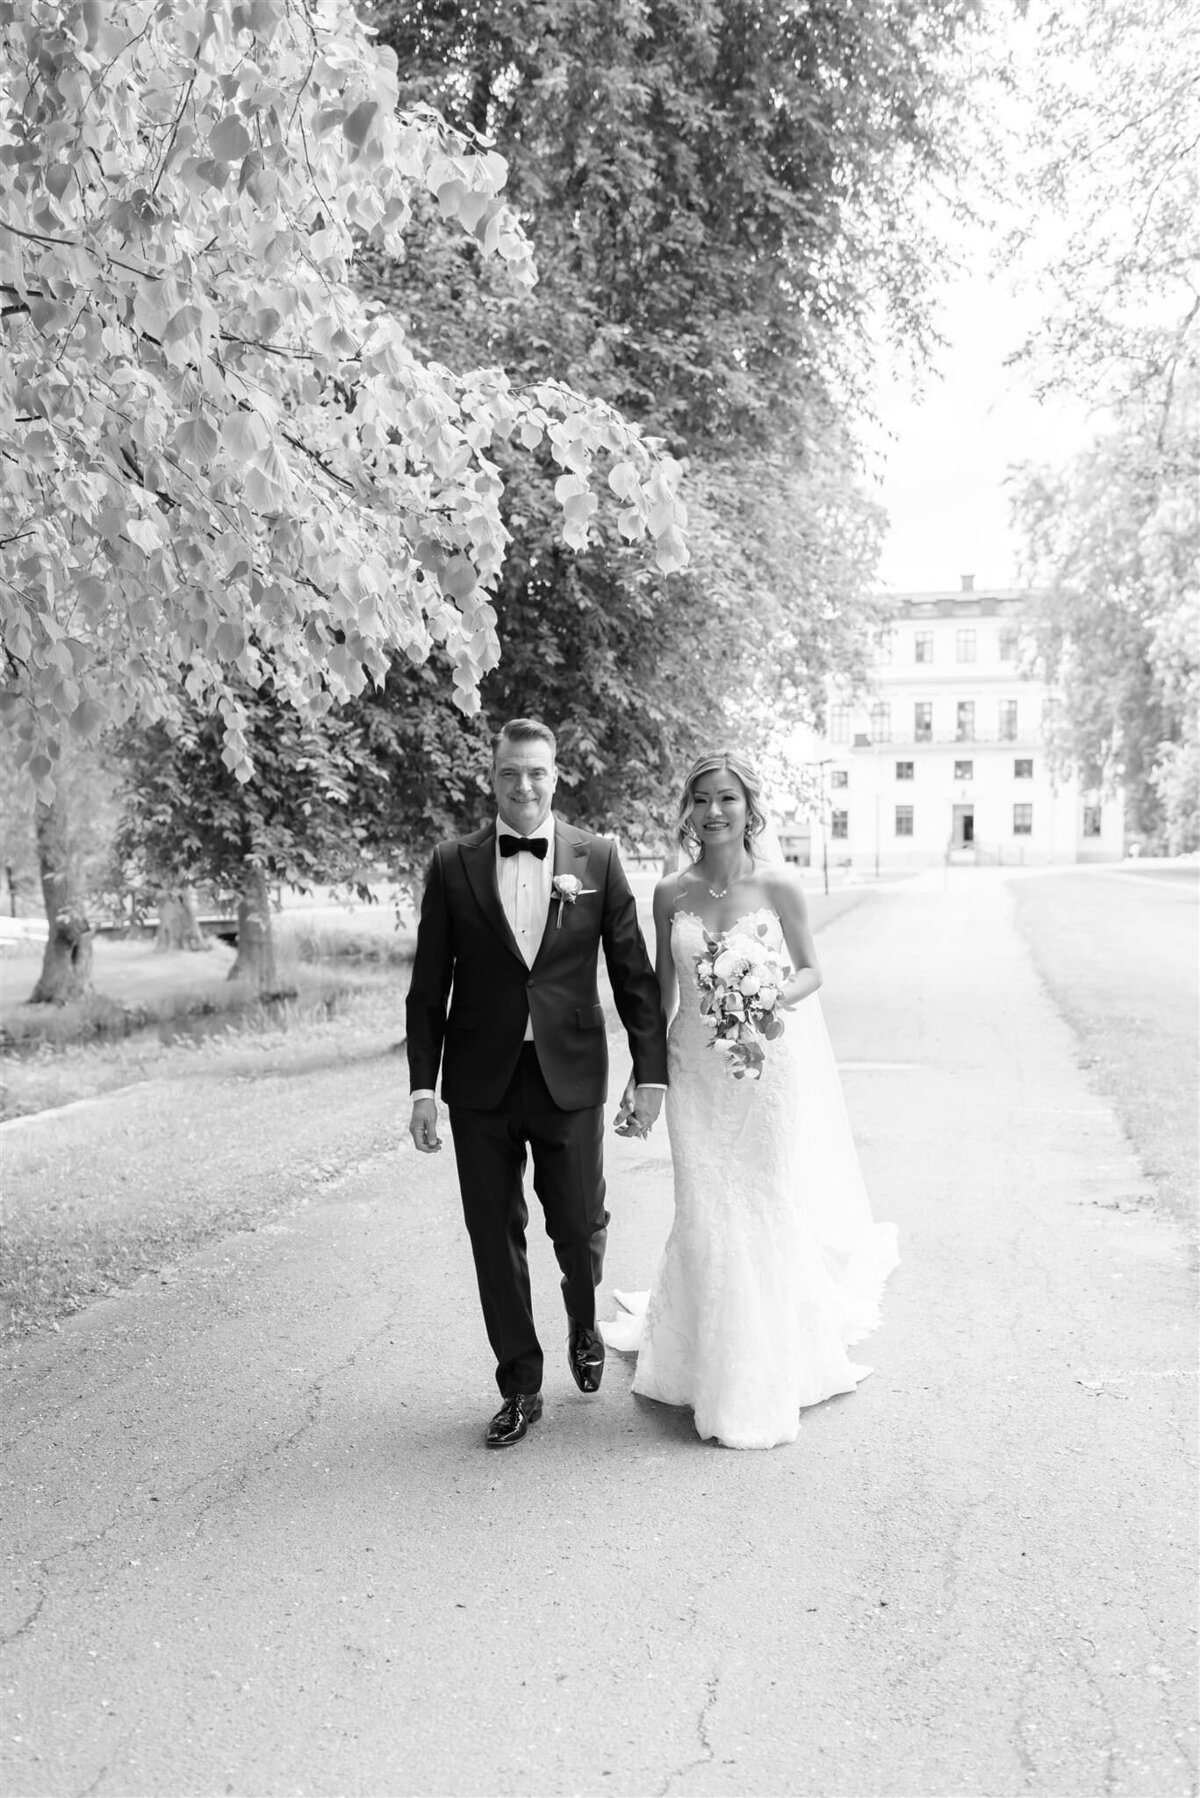 Wedding Photographer Anna Lundgren - helloalora_Rånäs Slott chateau wedding in Sweden timeless romantic outdoor bride and groom portraits in the castle garden